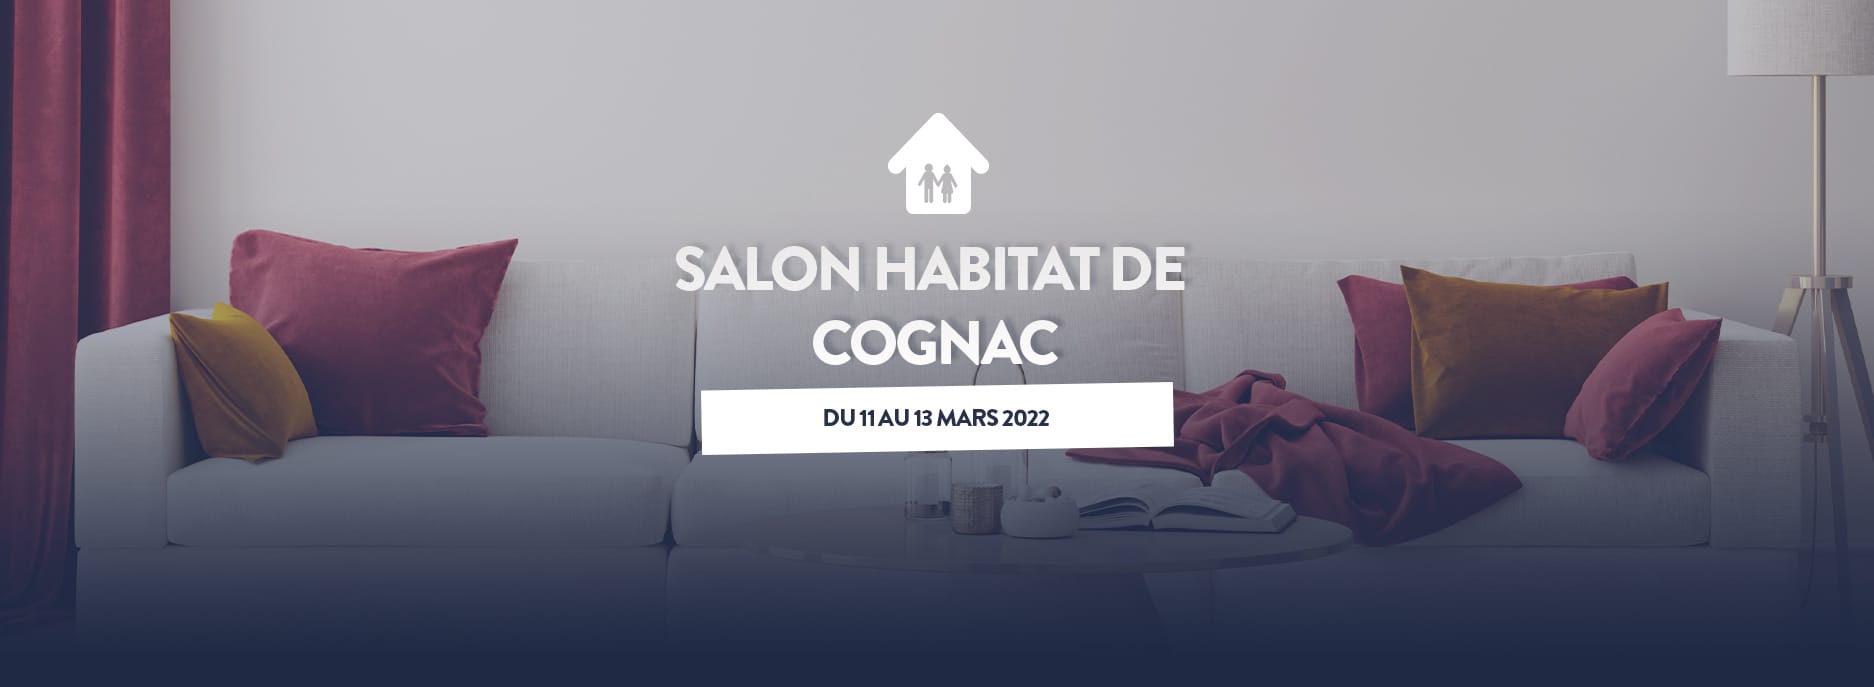 image salon habitat cognac 2022